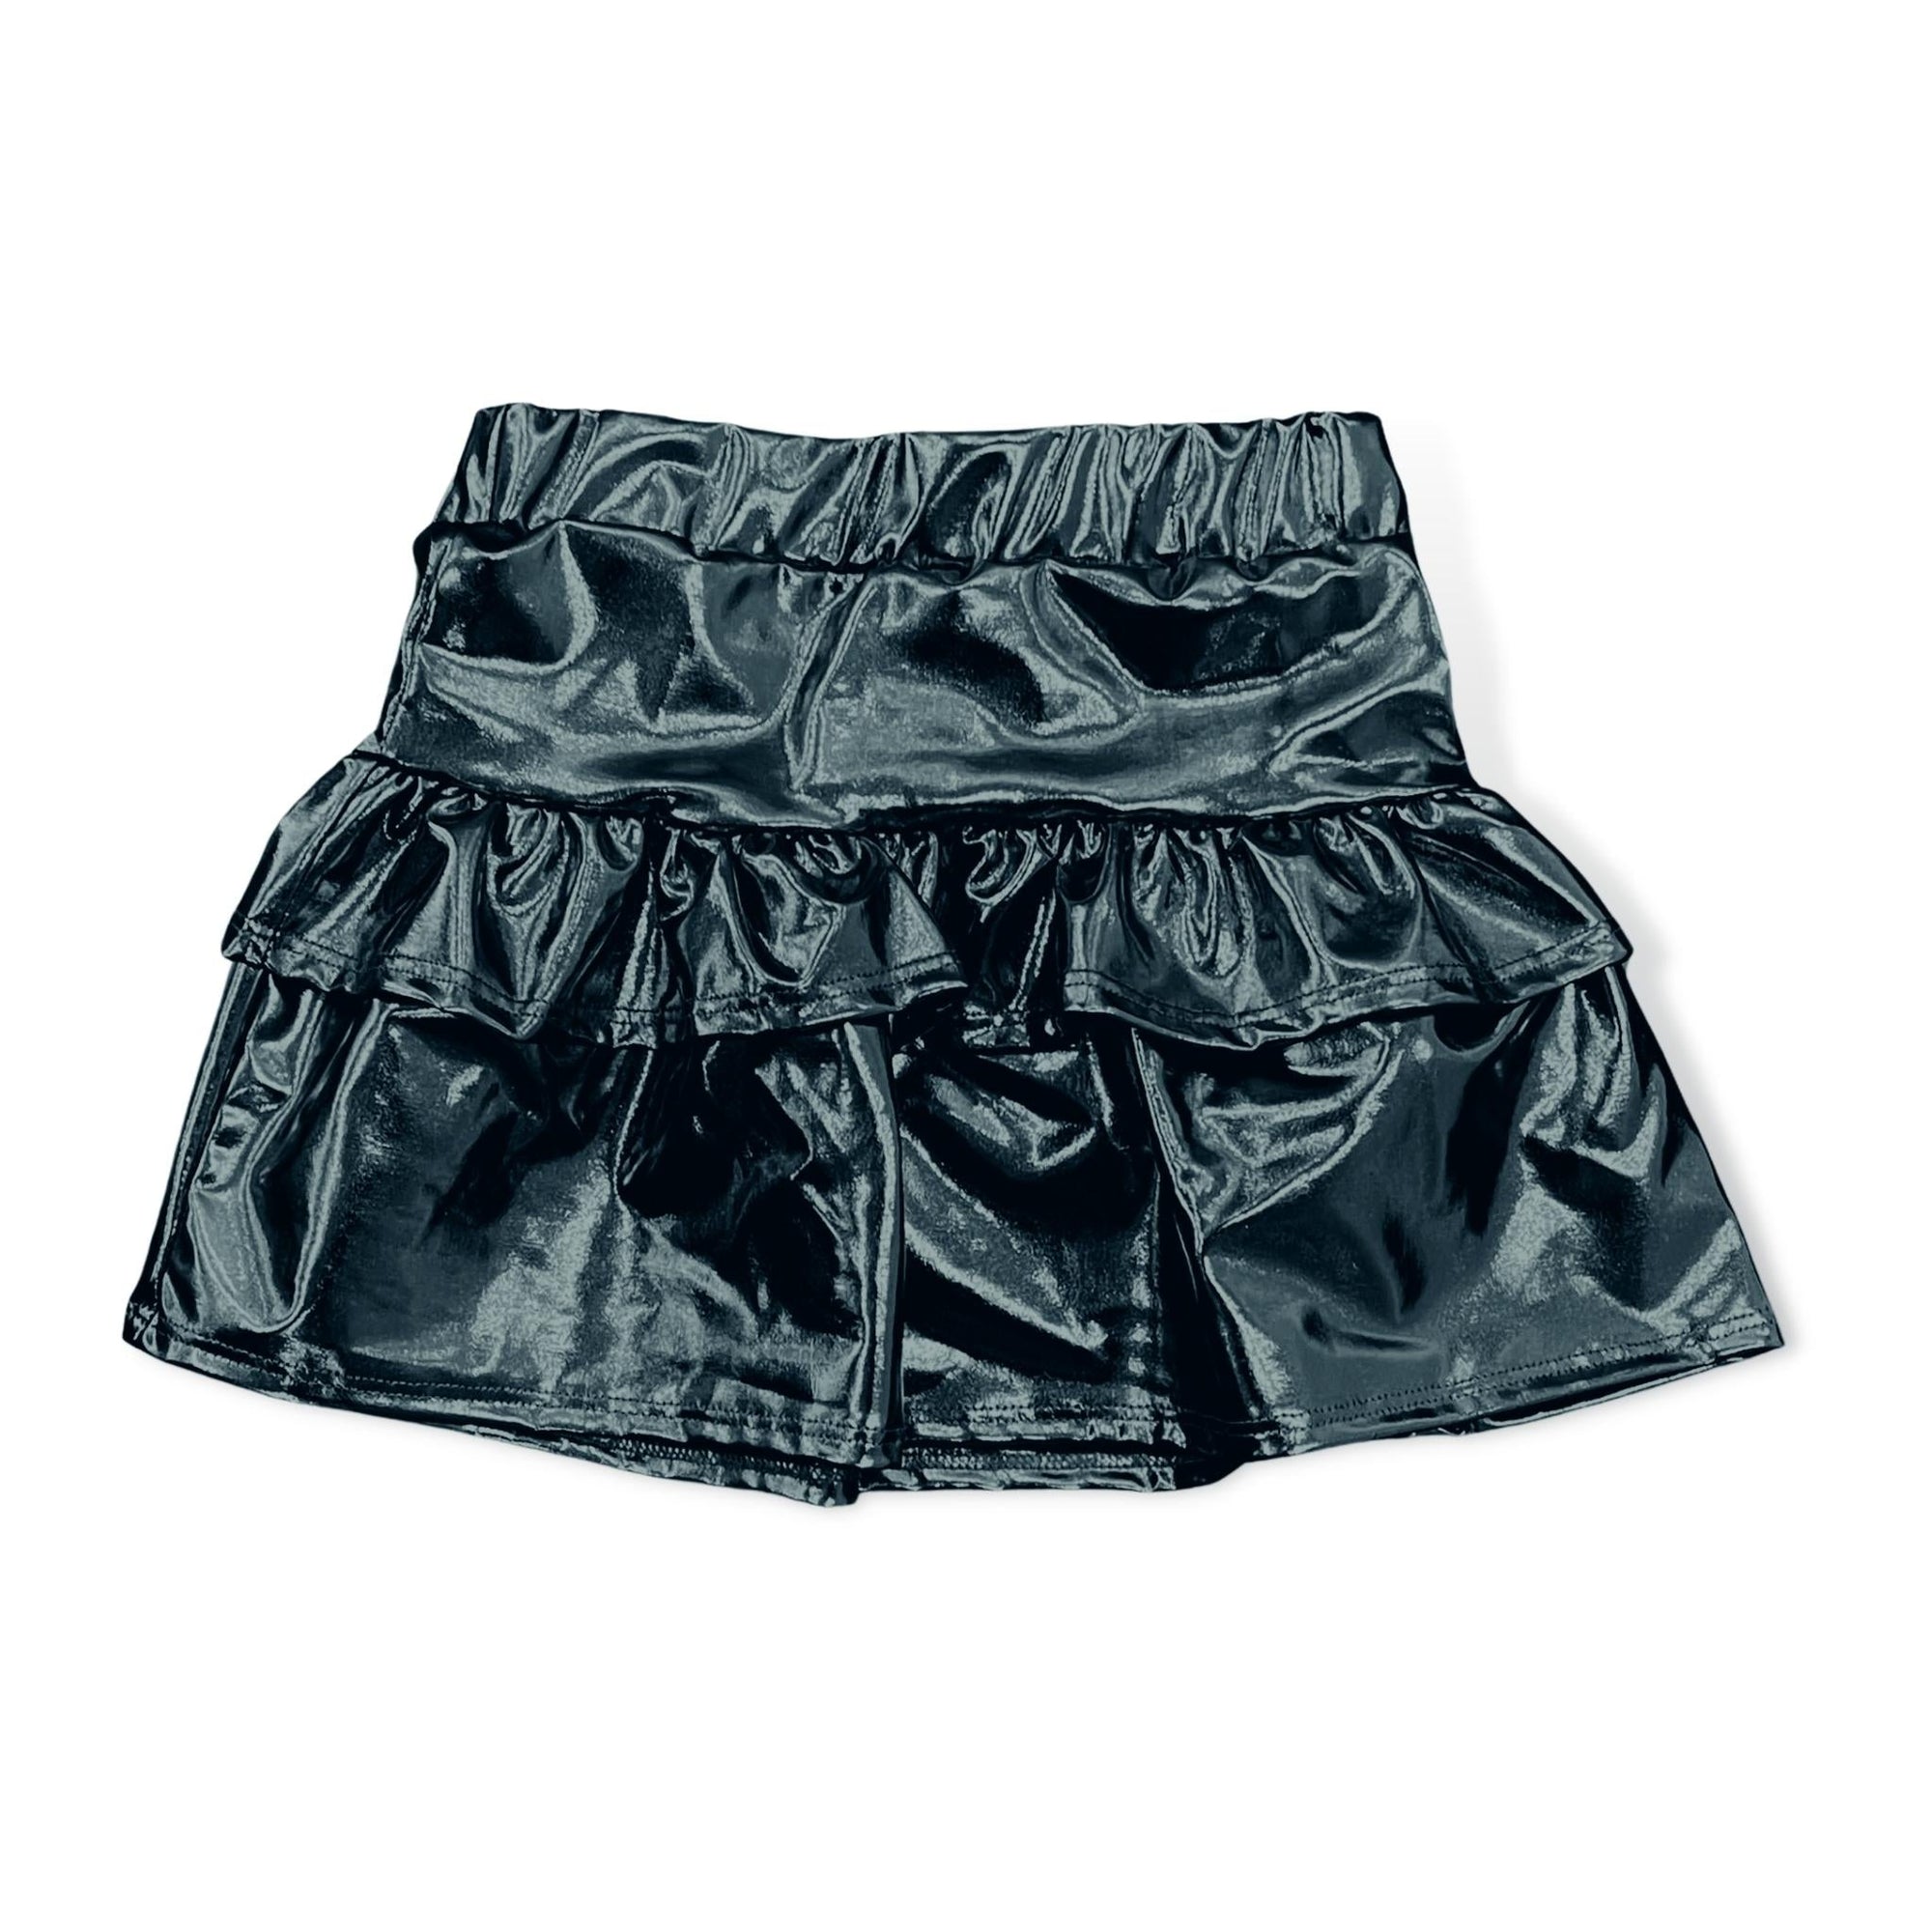 Tweenstyle Metallic Black Del Tiered Skirt - a Spirit Animal - Skirts $30-$60 $60-$75 $60-$90